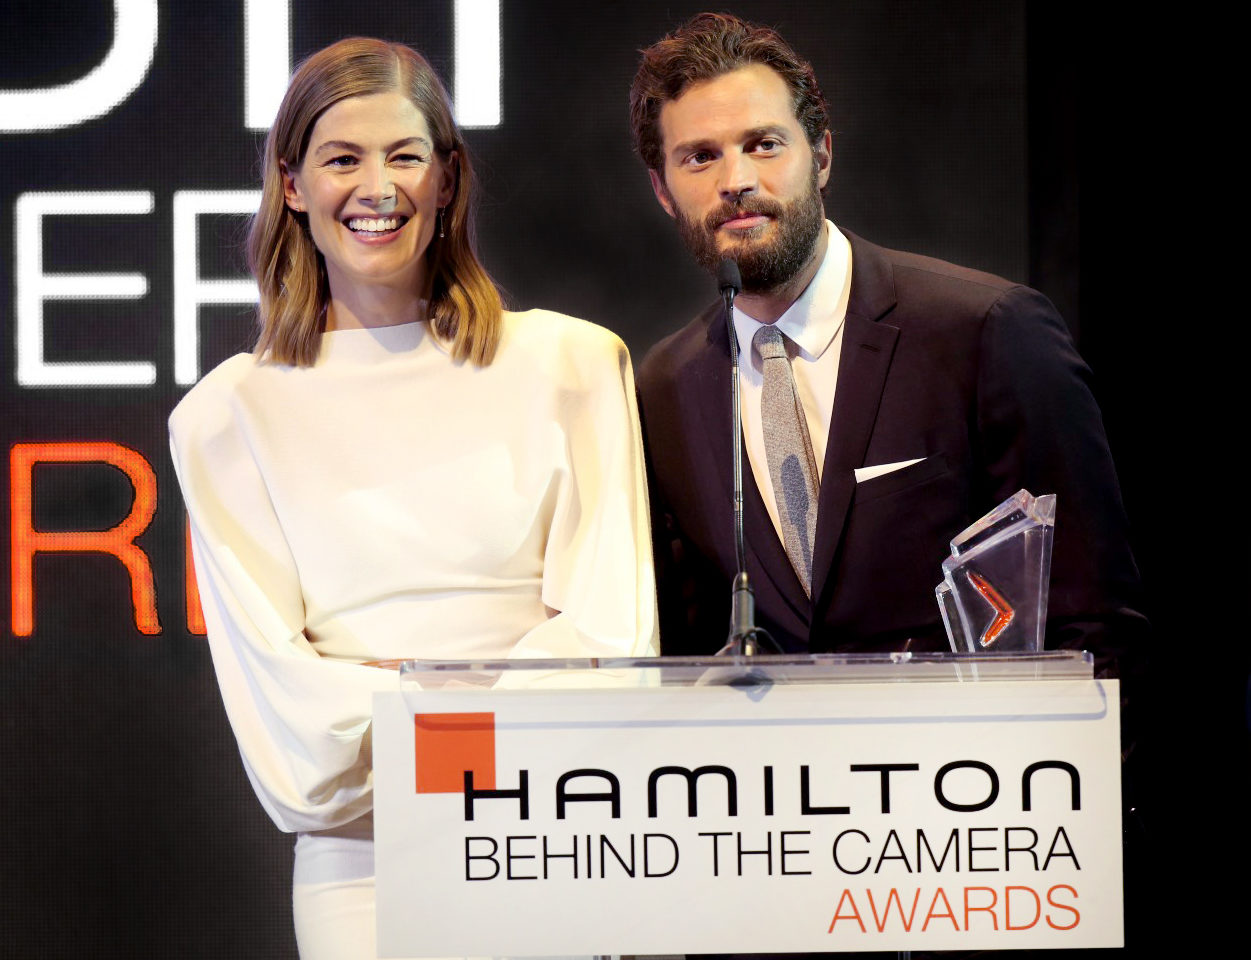 Hamilton behind the camera awards 2018 rosamund pike jamie dornan on stage 1 e1541670943431